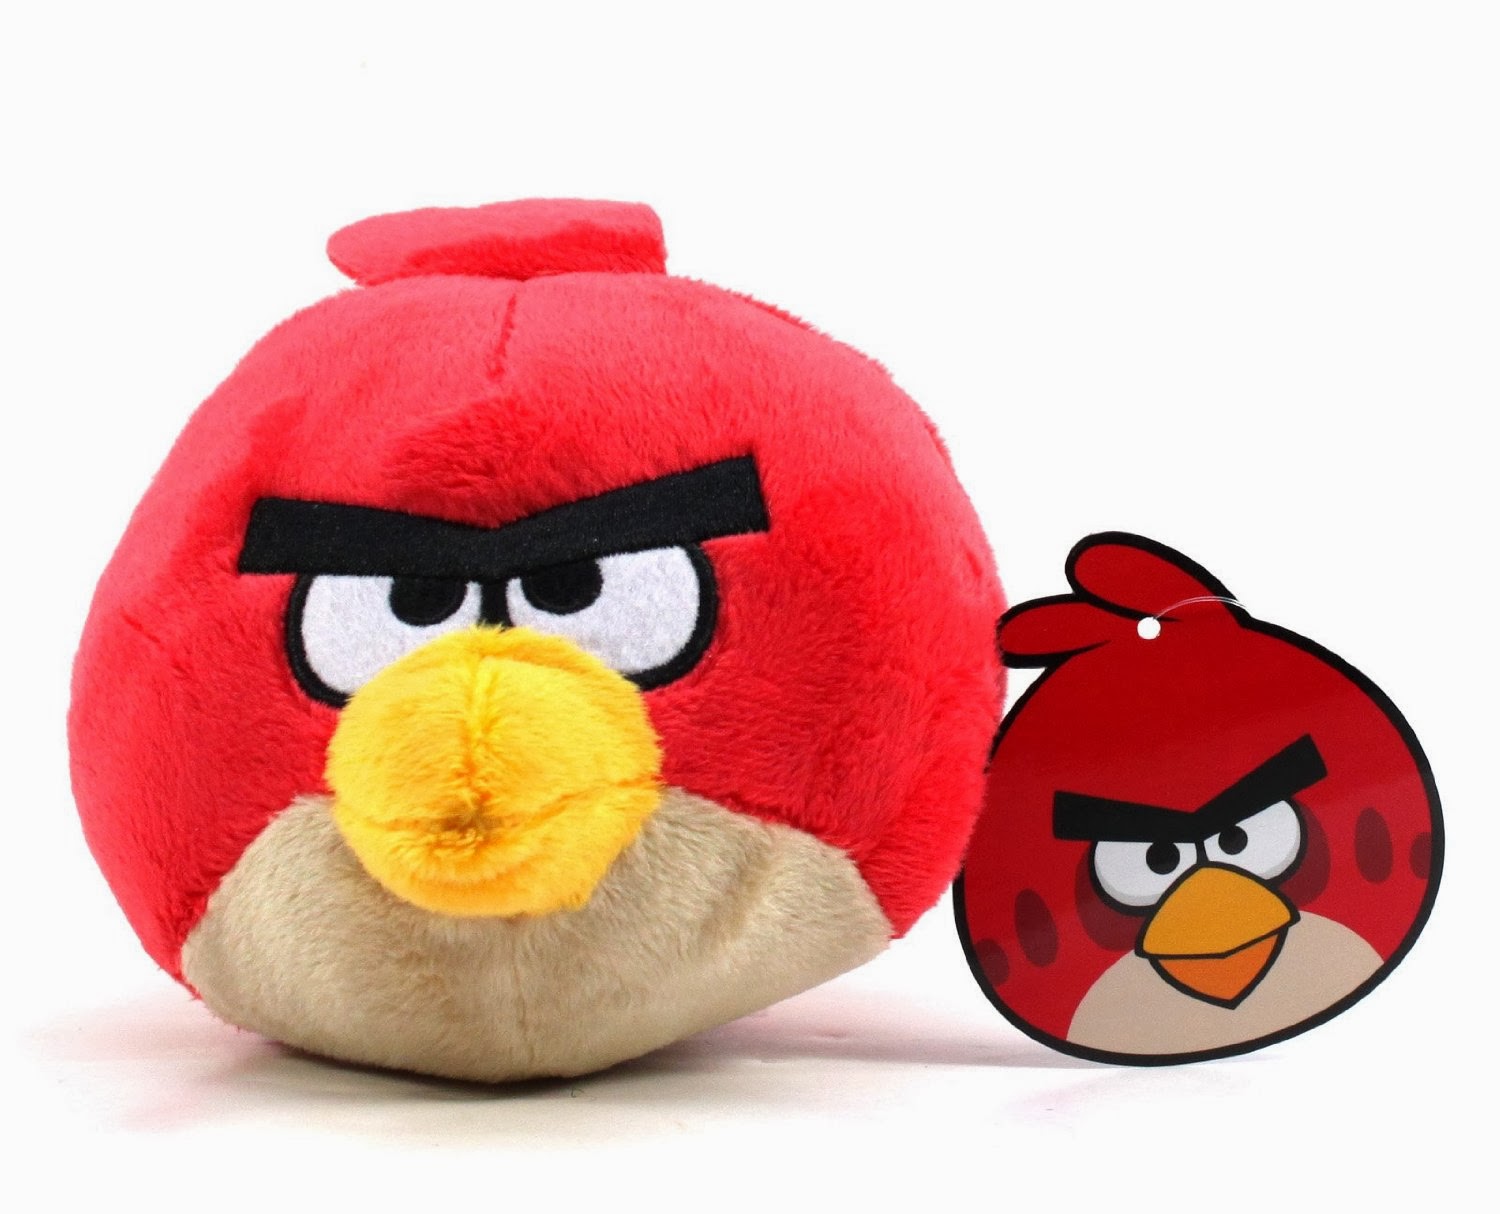 Мягкие игрушки энгри бердз. Rovio Энгри бердз. Елочные игрушки Энгри бердз. Angry Birds Plush. Angry Birds Red игрушка.